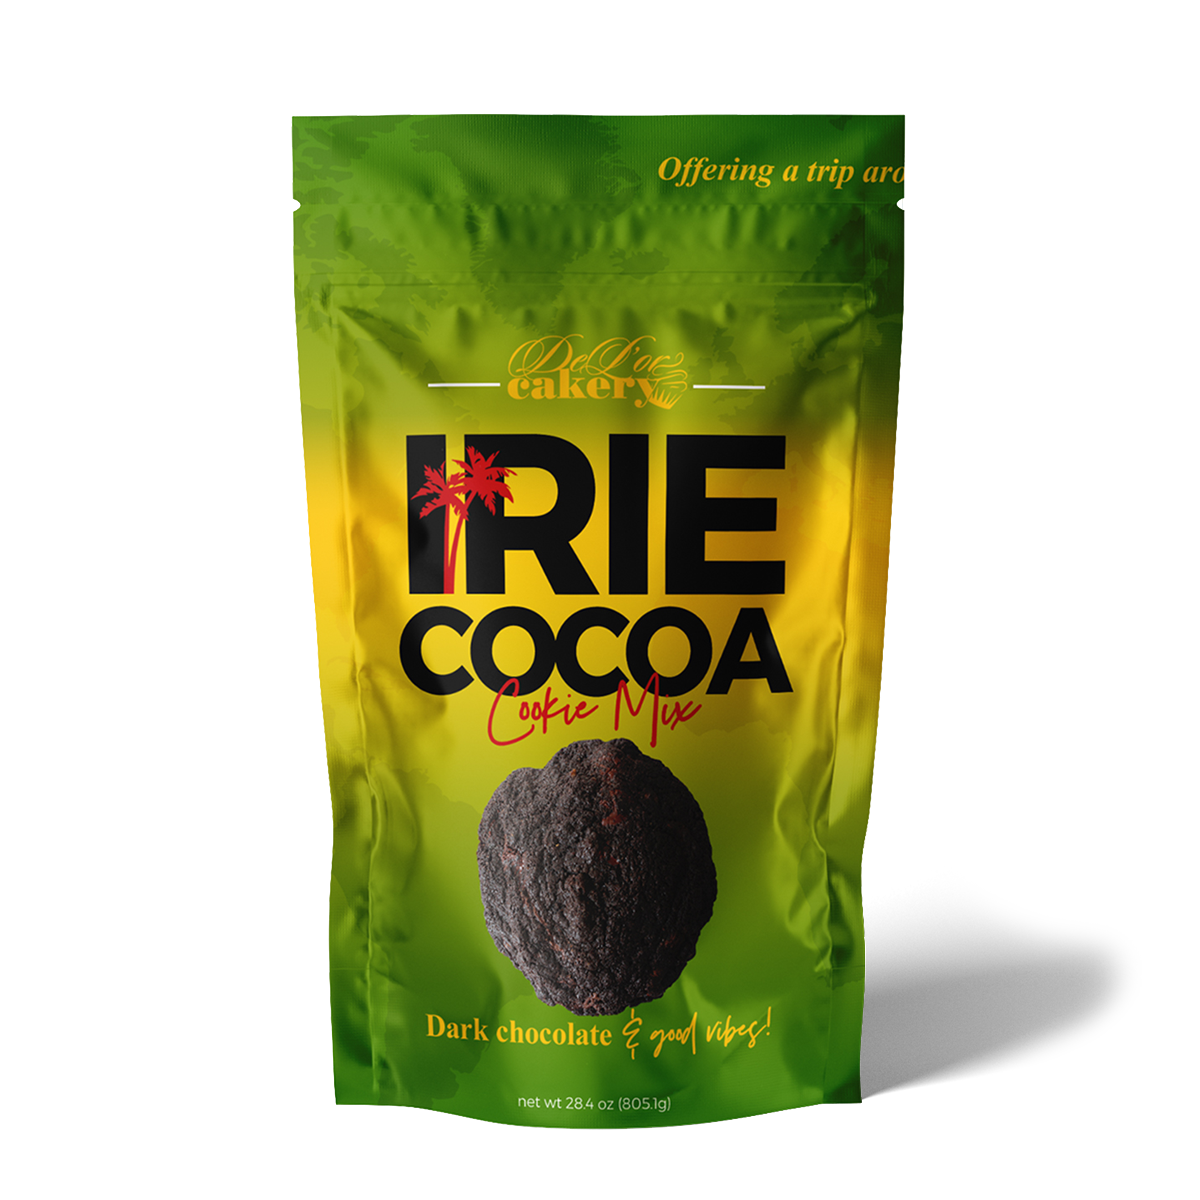 Irie Cocoa Cookie Mix